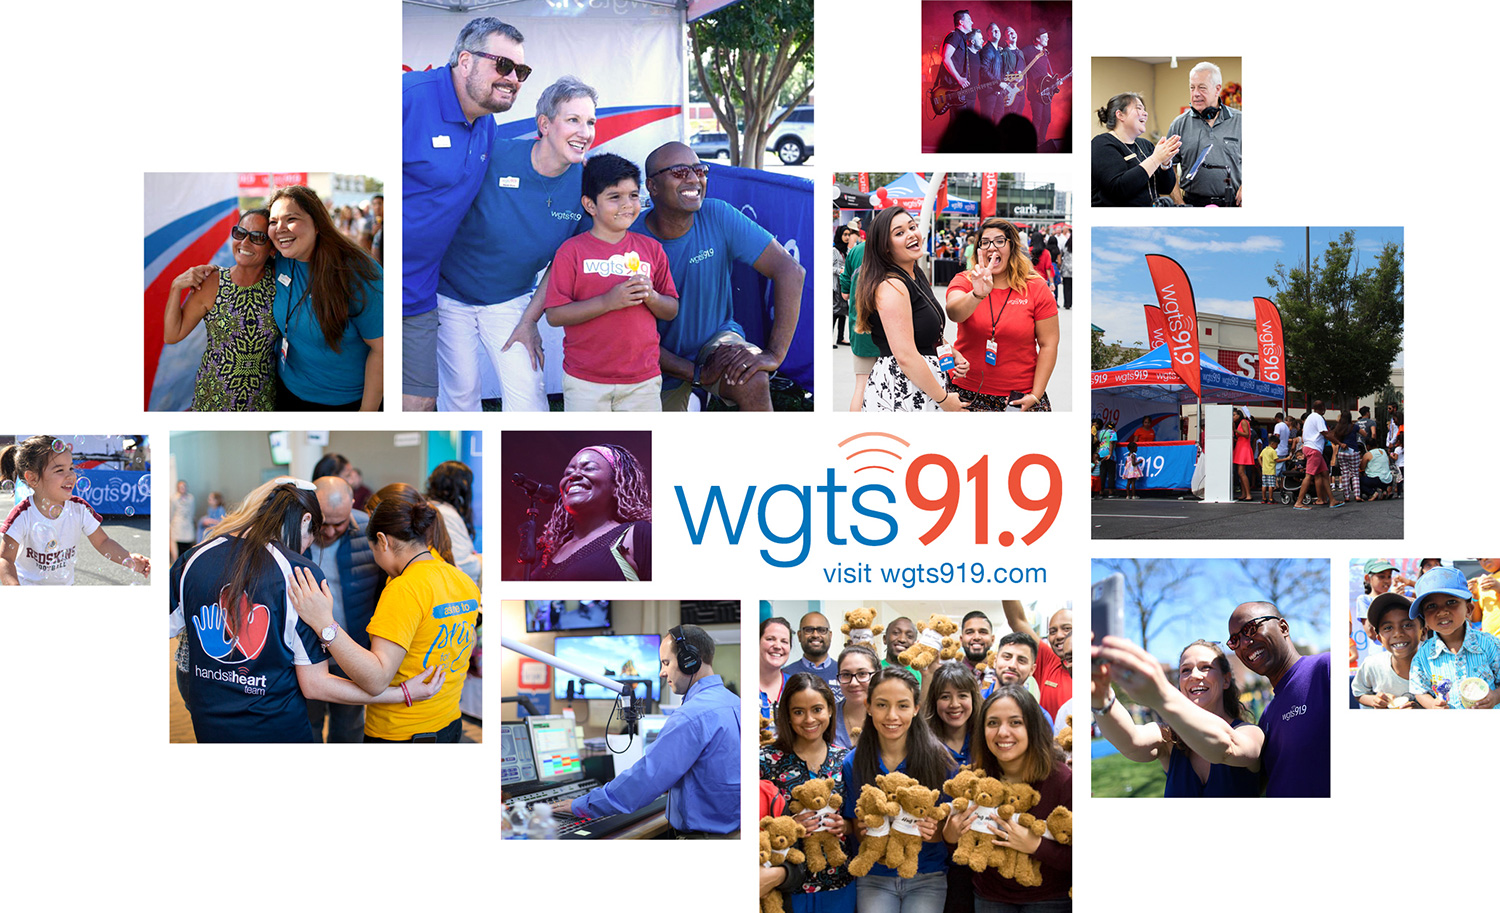 WGTS: Visit wgts919.com